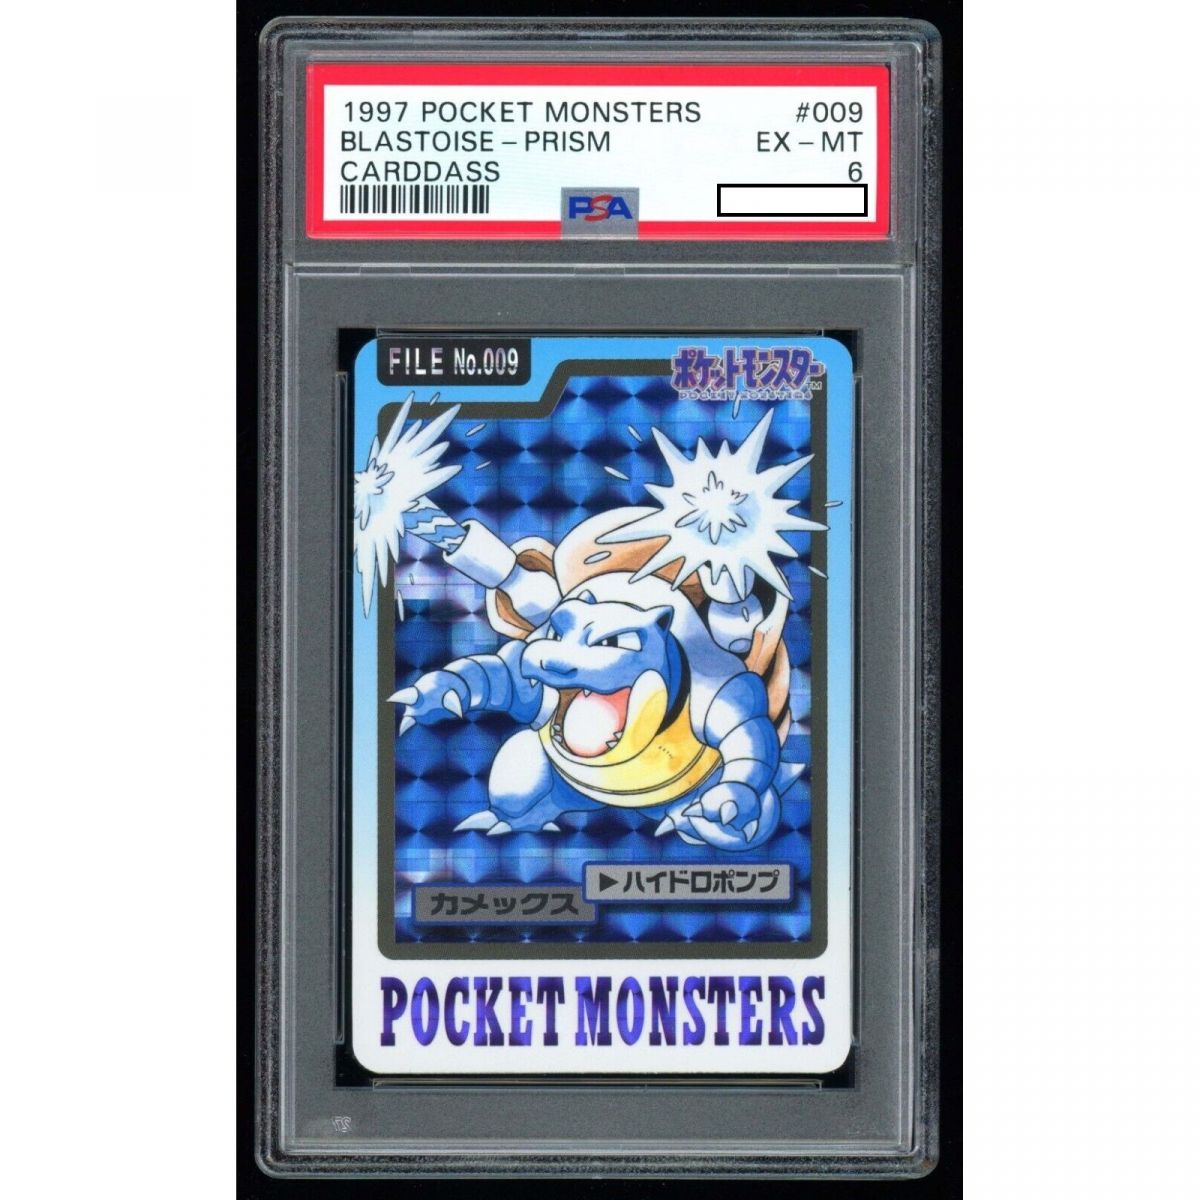 Pokémon – Graded Card – Blastoise 009 Prism Pocket Monster Carddass 1997 Japanisch [PSA 6 – EX-MT]